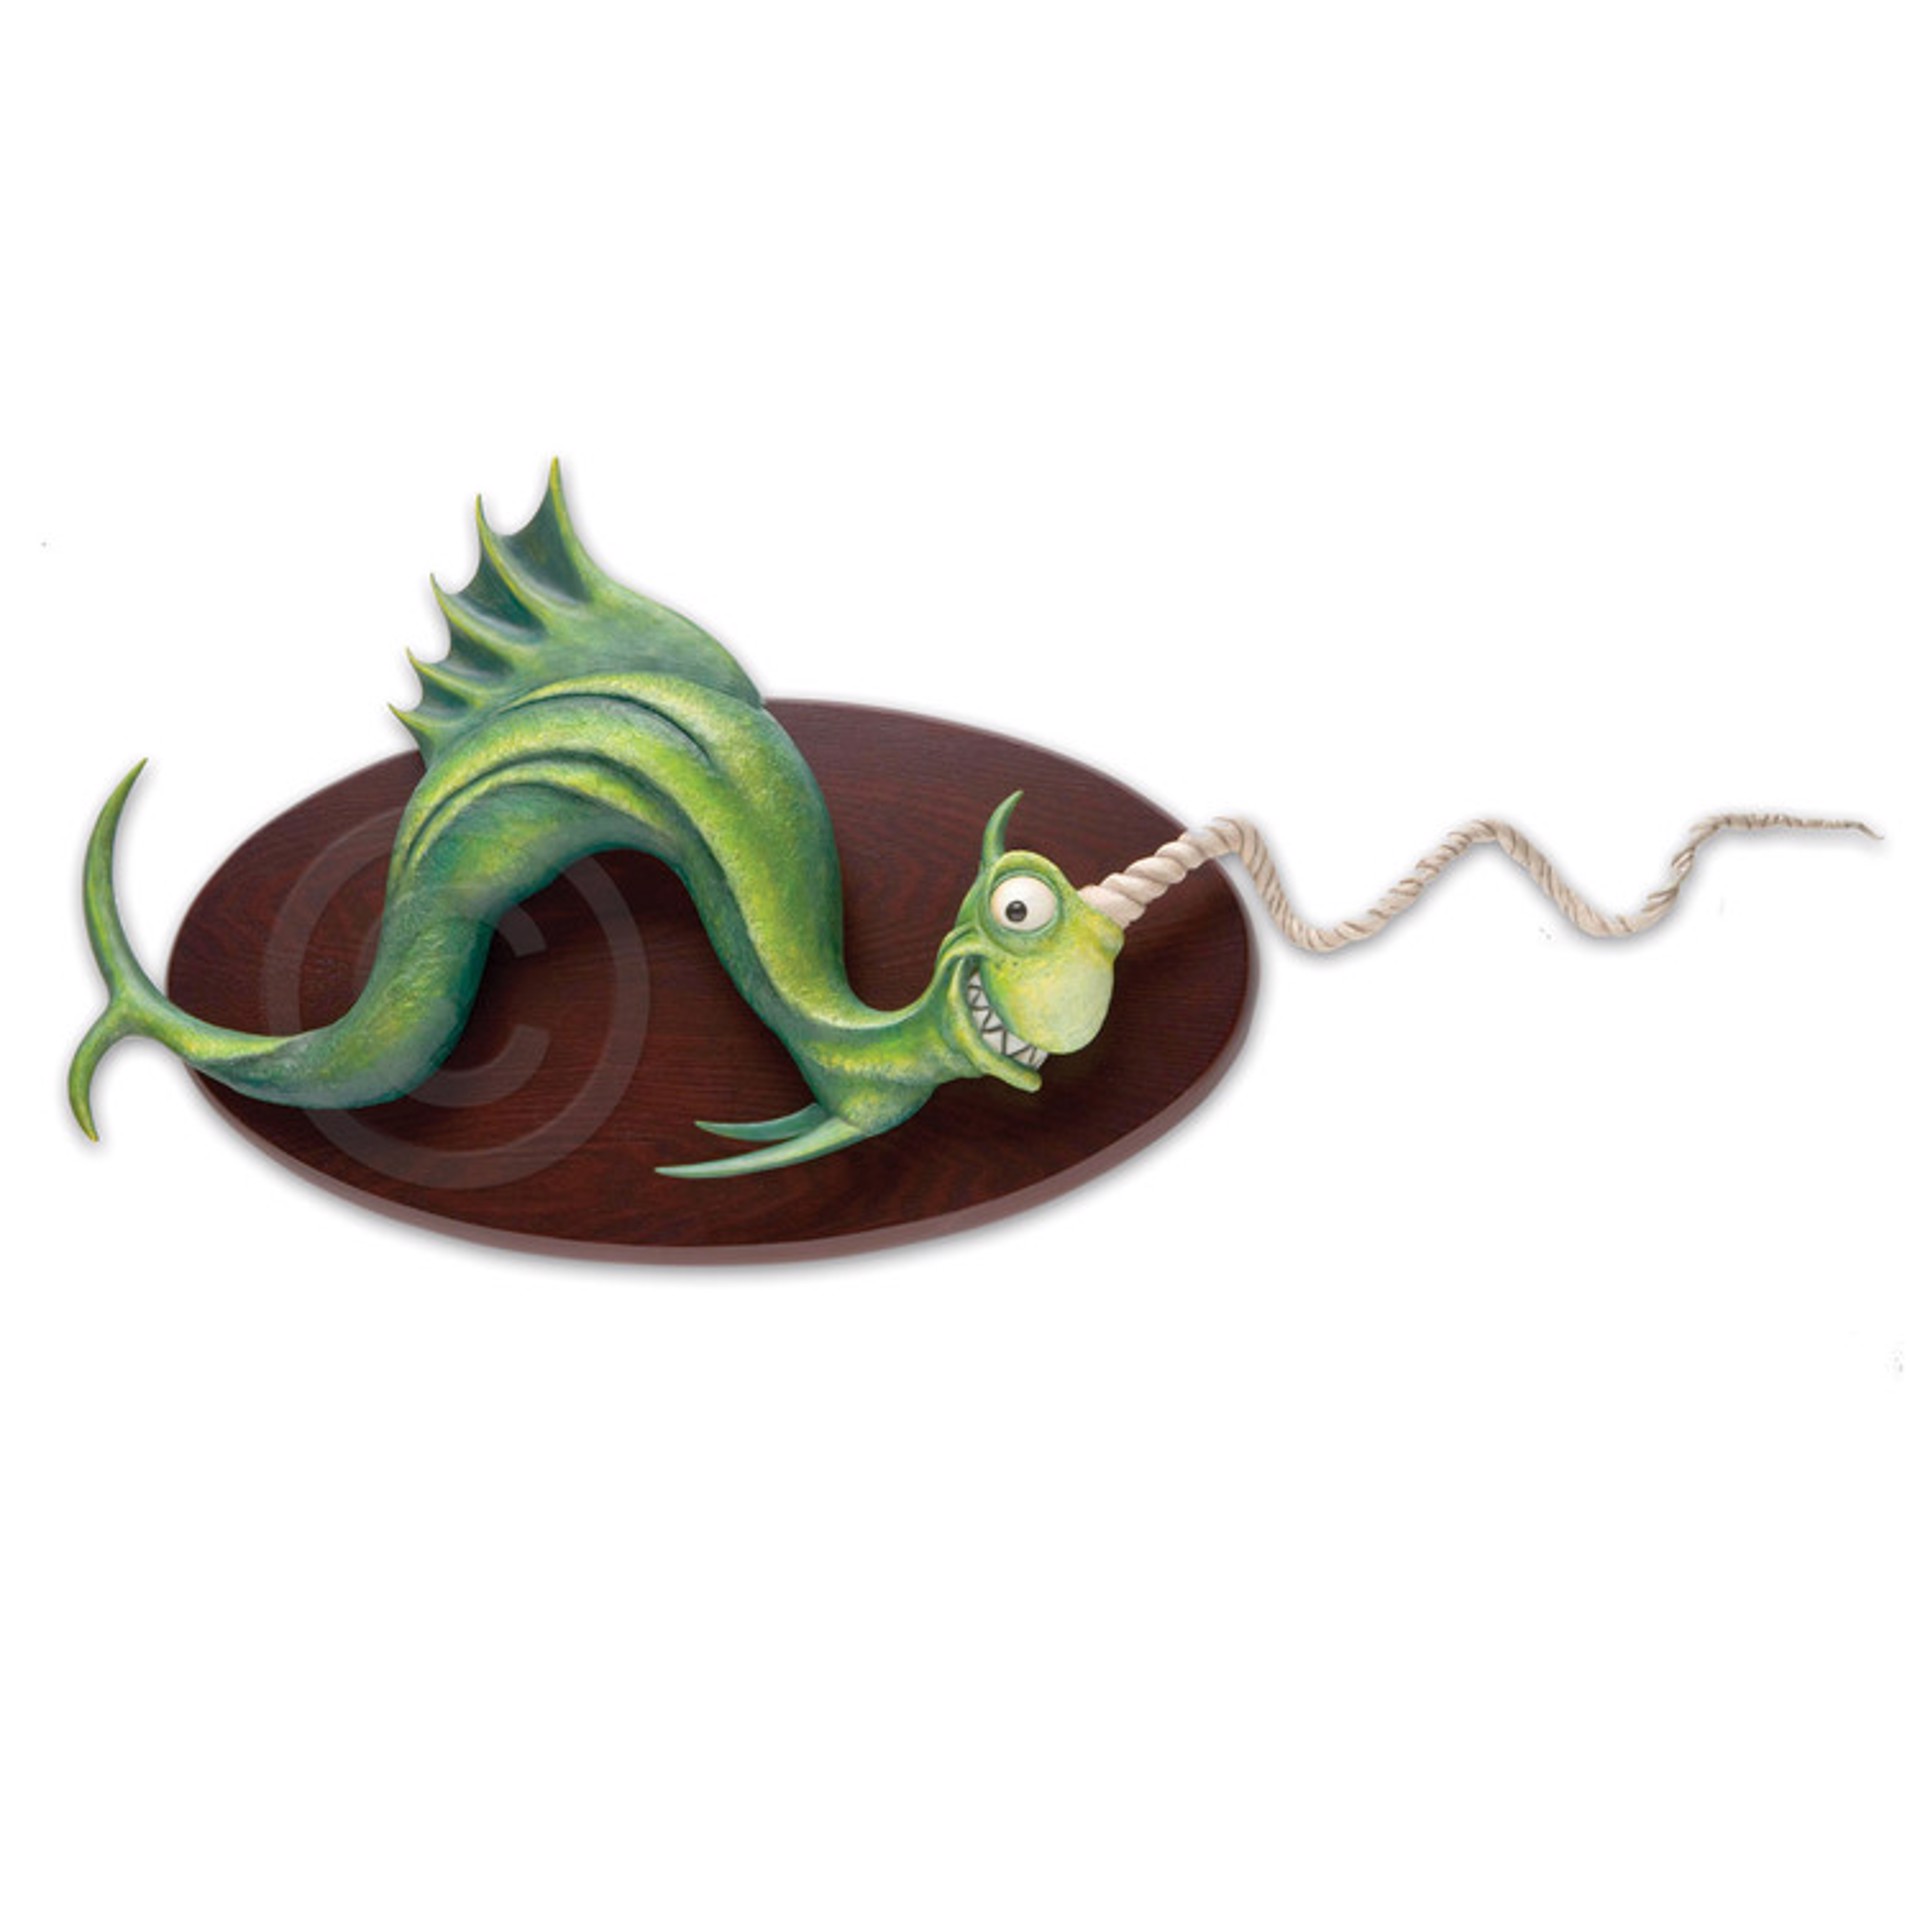 Gimlet Fish by Theodor Seuss Geisel